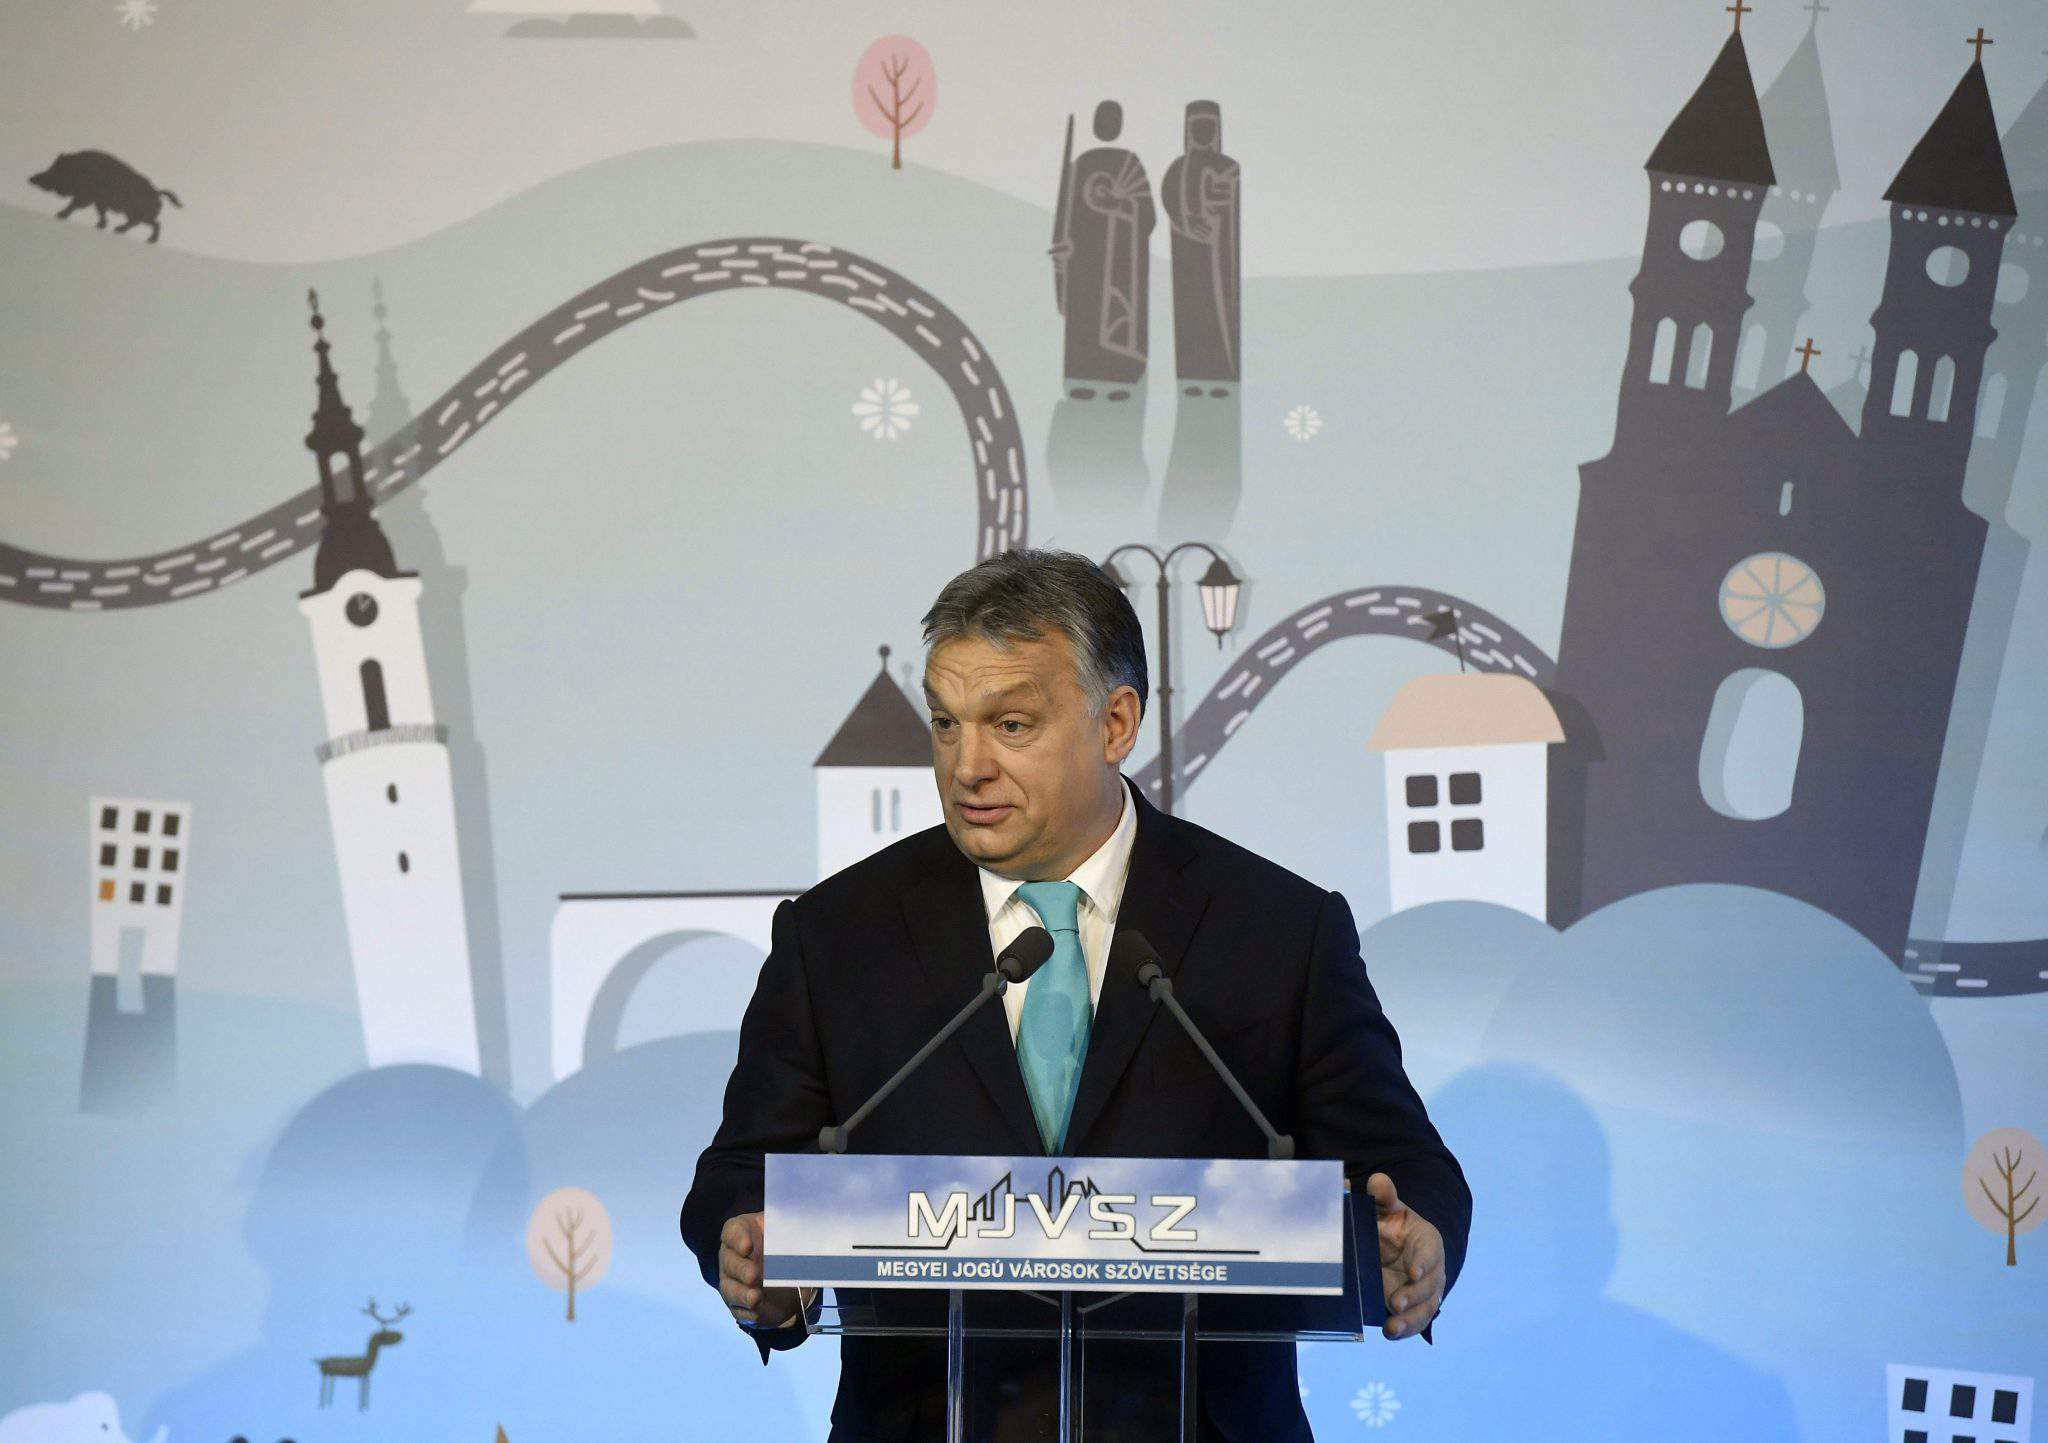 viktor orbán talk Veszprém prime minister